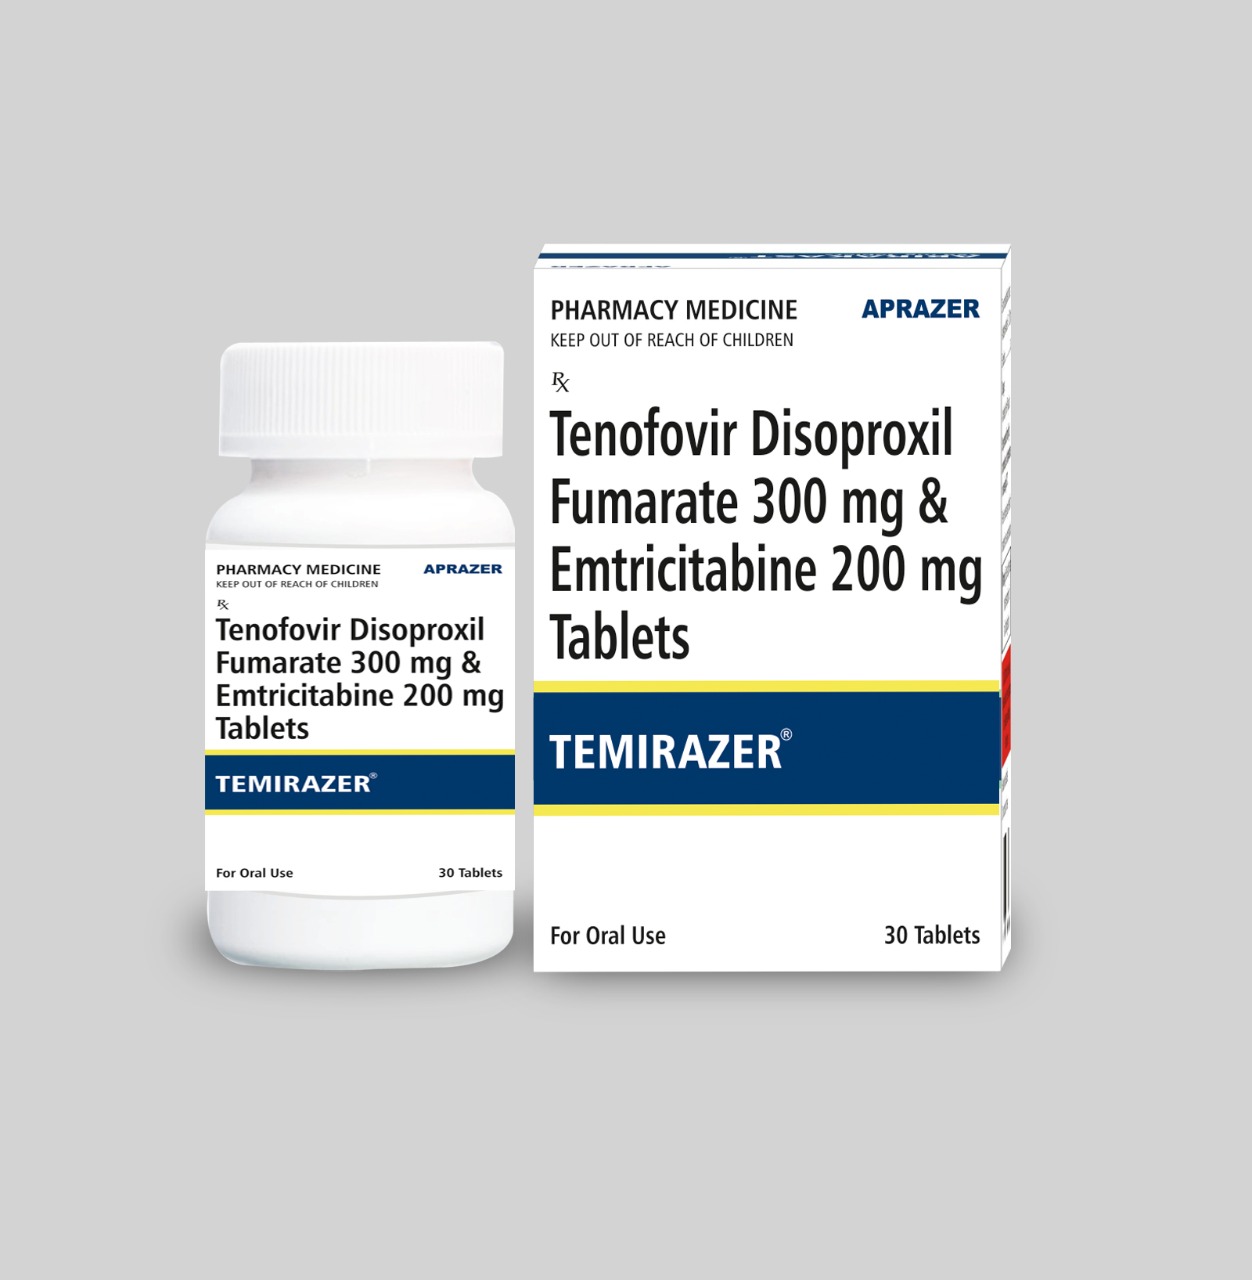 WHO cho phép sử dụng Tenofovir Disoproxil Fumarate và Emtricitabine trong PREP